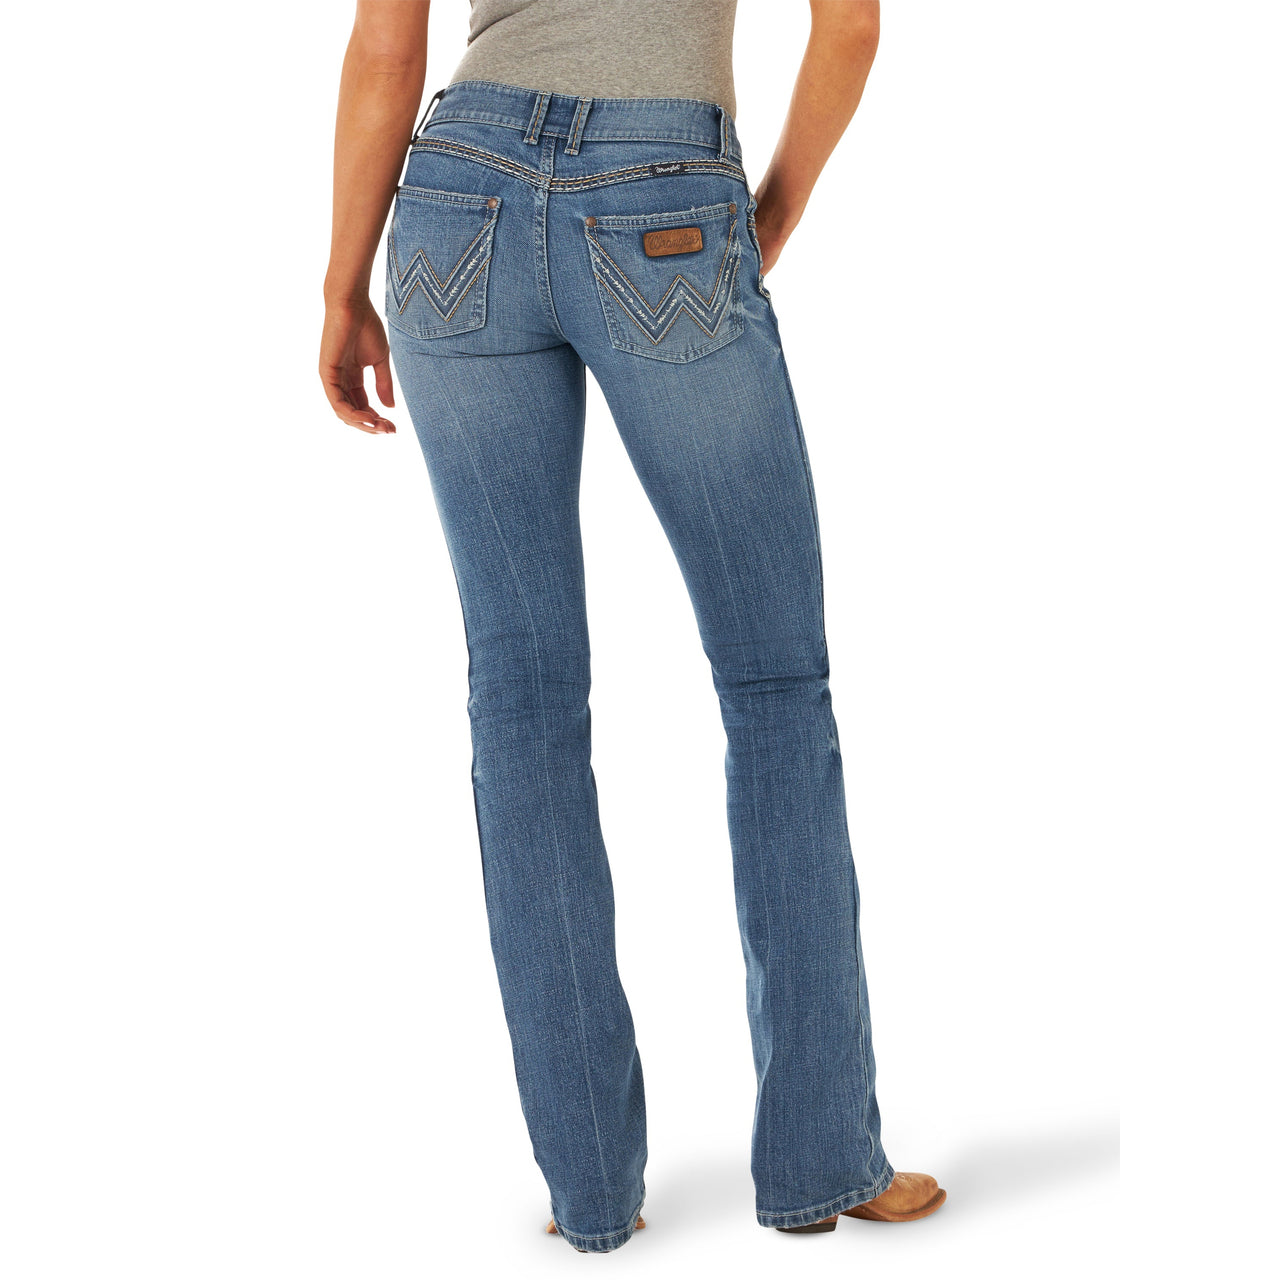 Wrangler Women's Retro Sadie Low Rise Bootcut Jeans - Light Stonewash